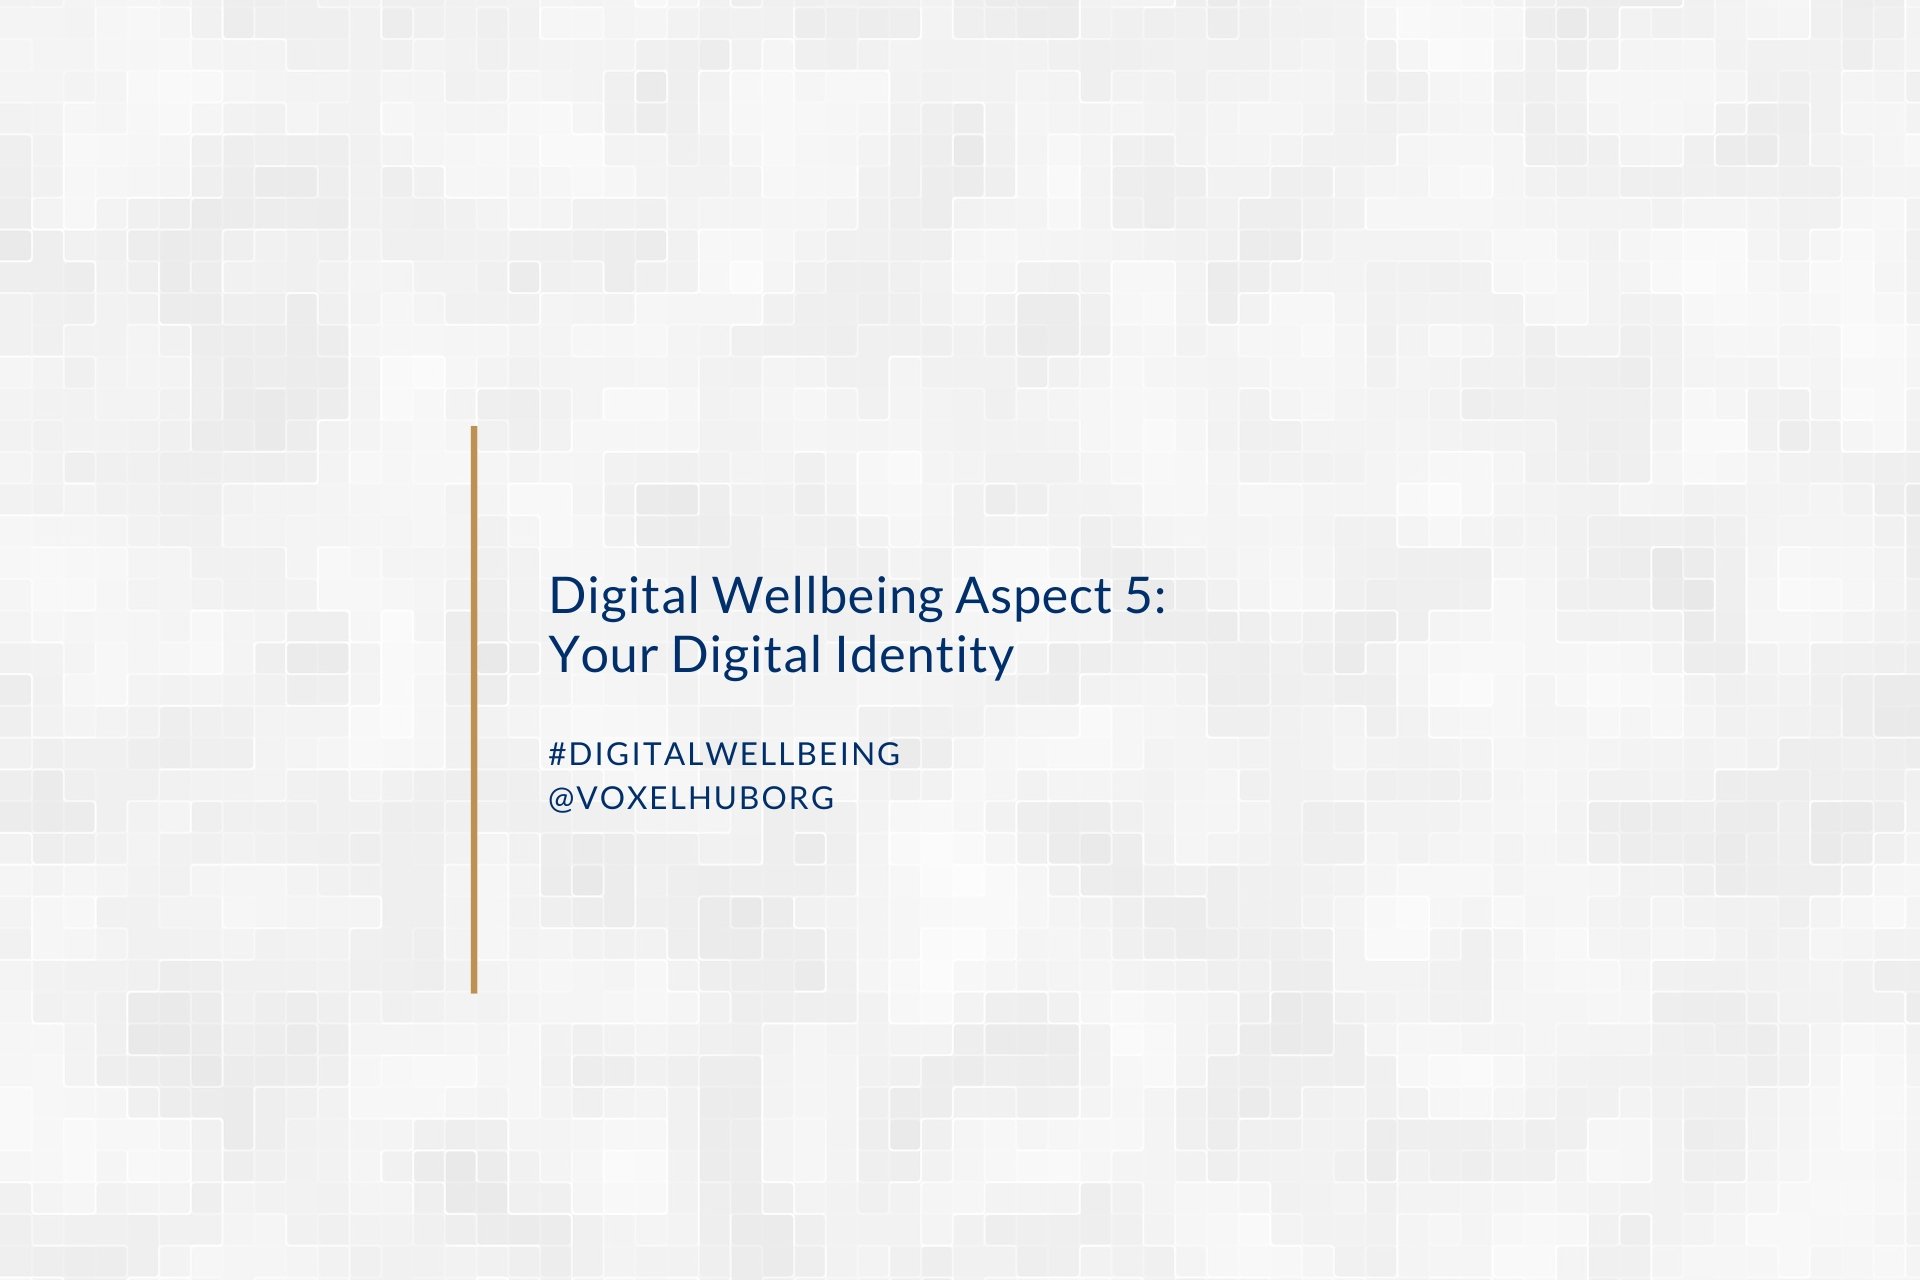 Digital Wellbeing Aspects 5